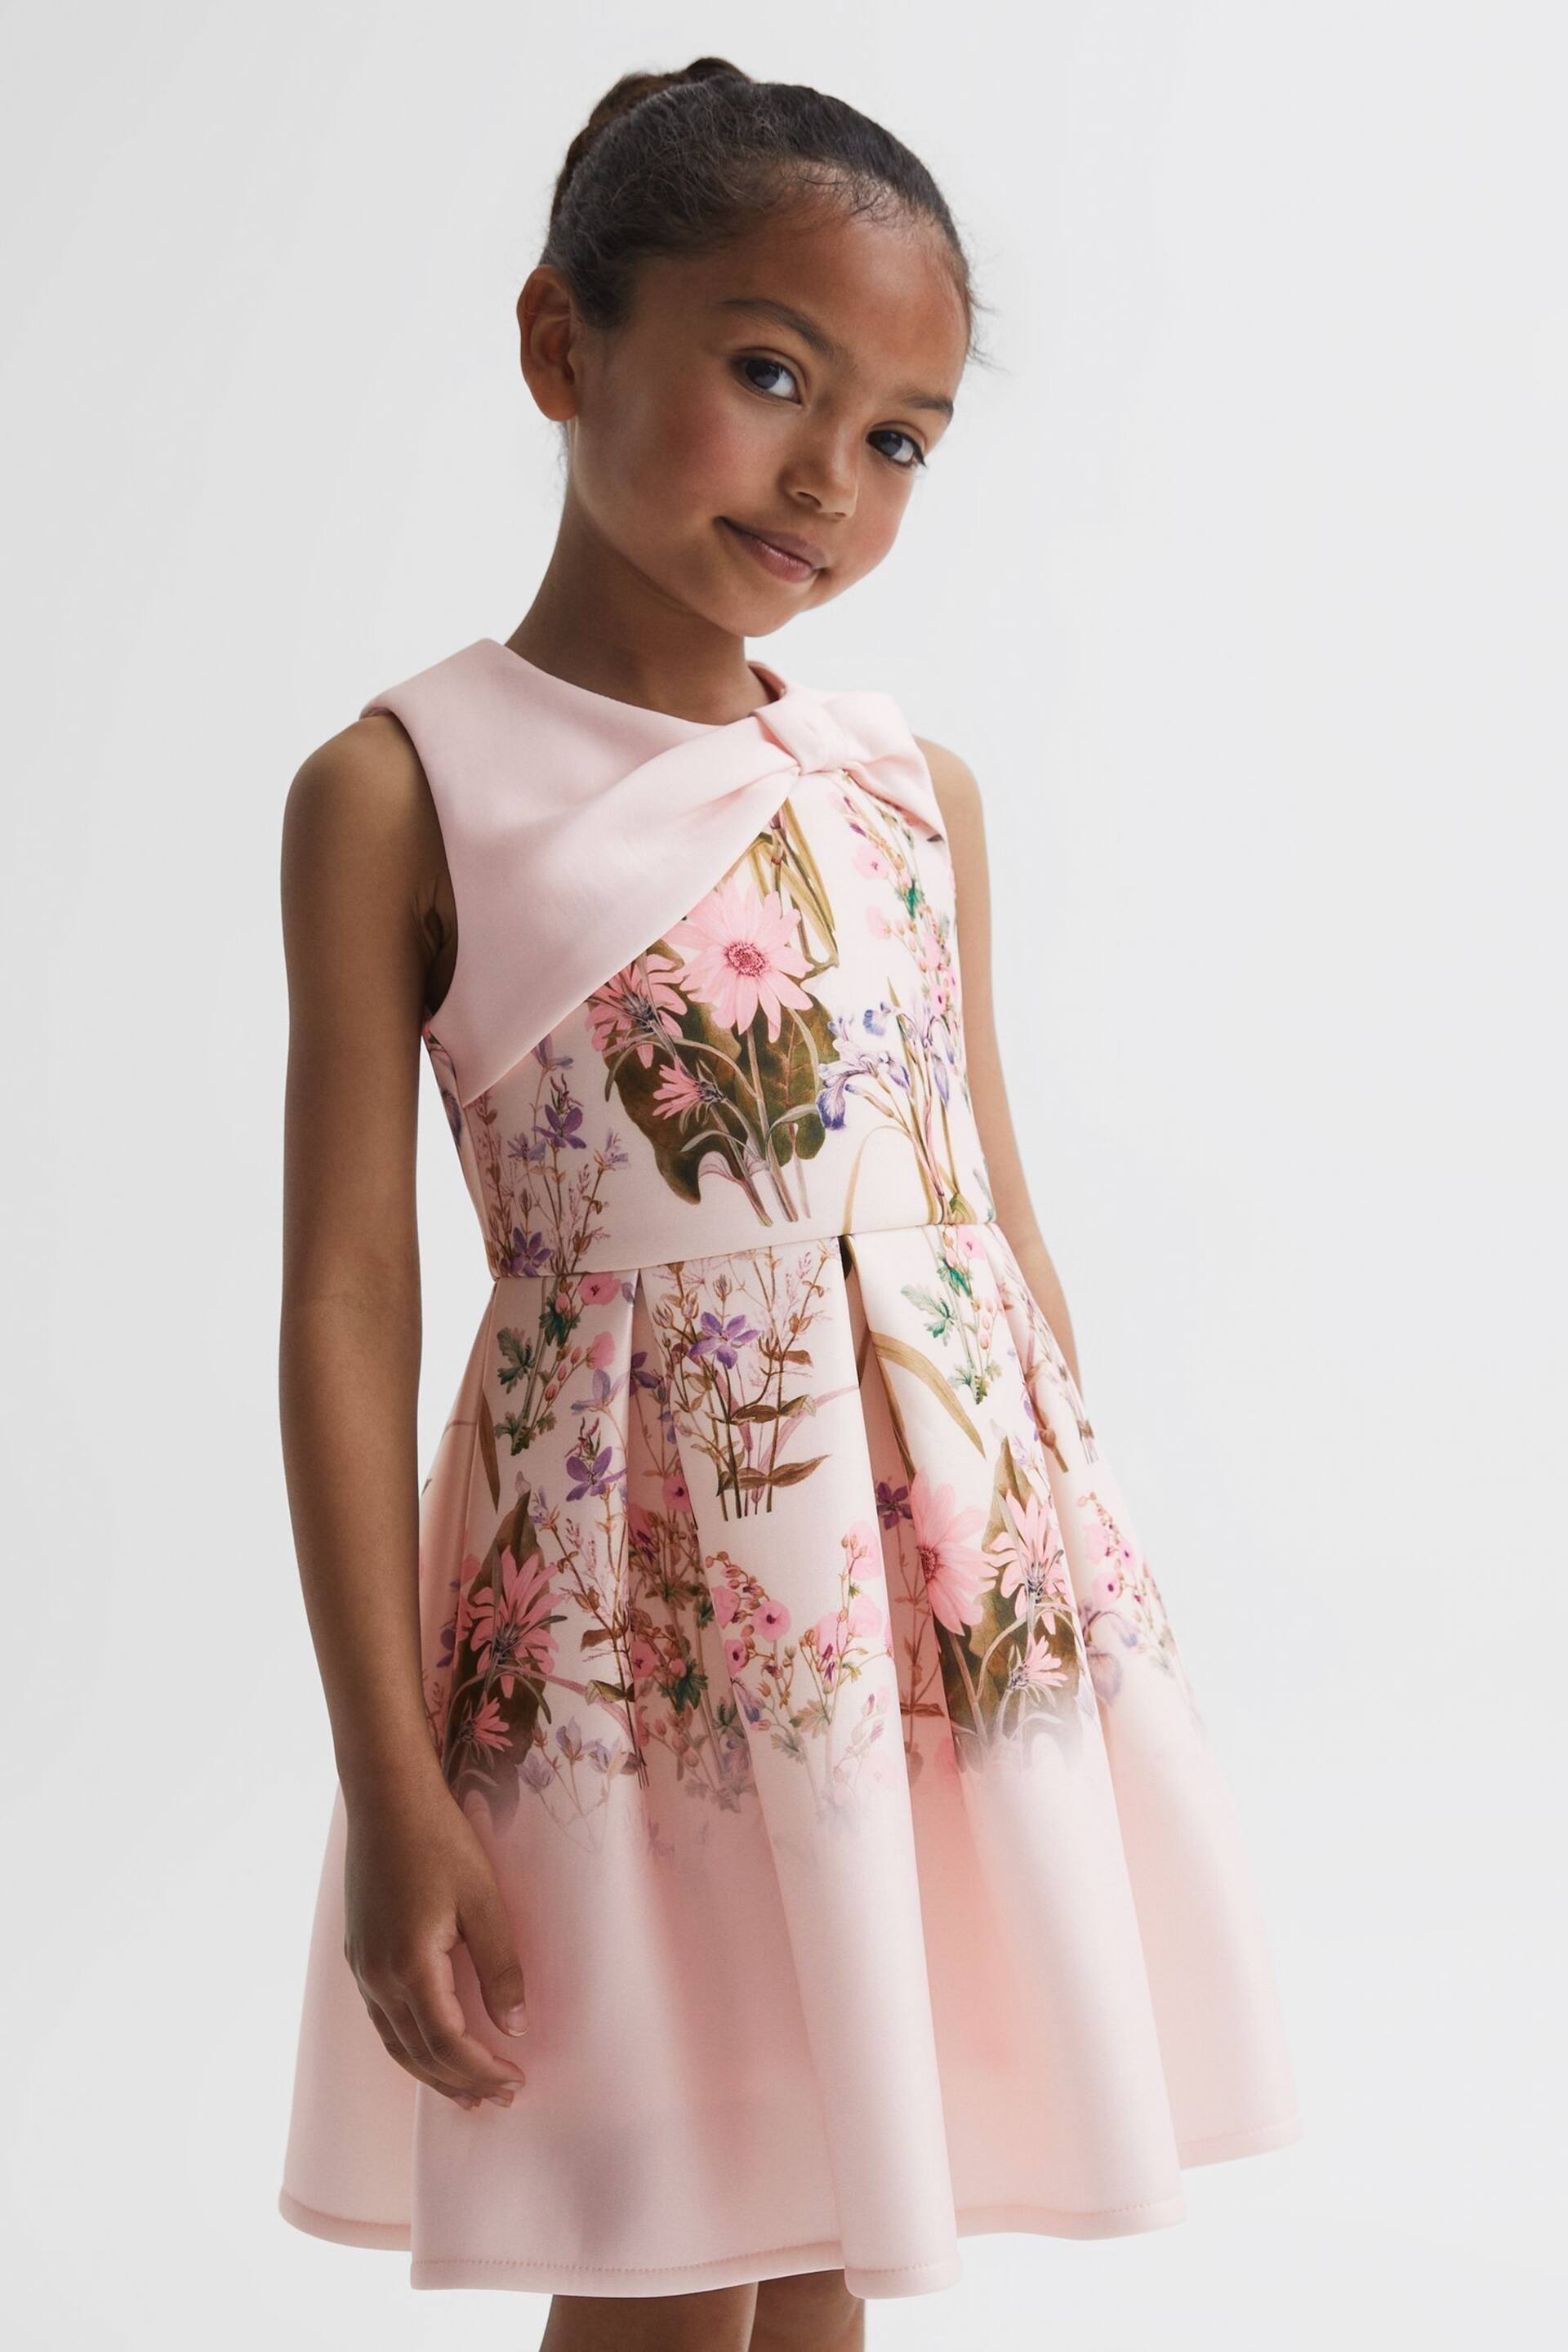 Reiss Multi Emily Junior Scuba Floral Printed Dress - Image 1 of 5